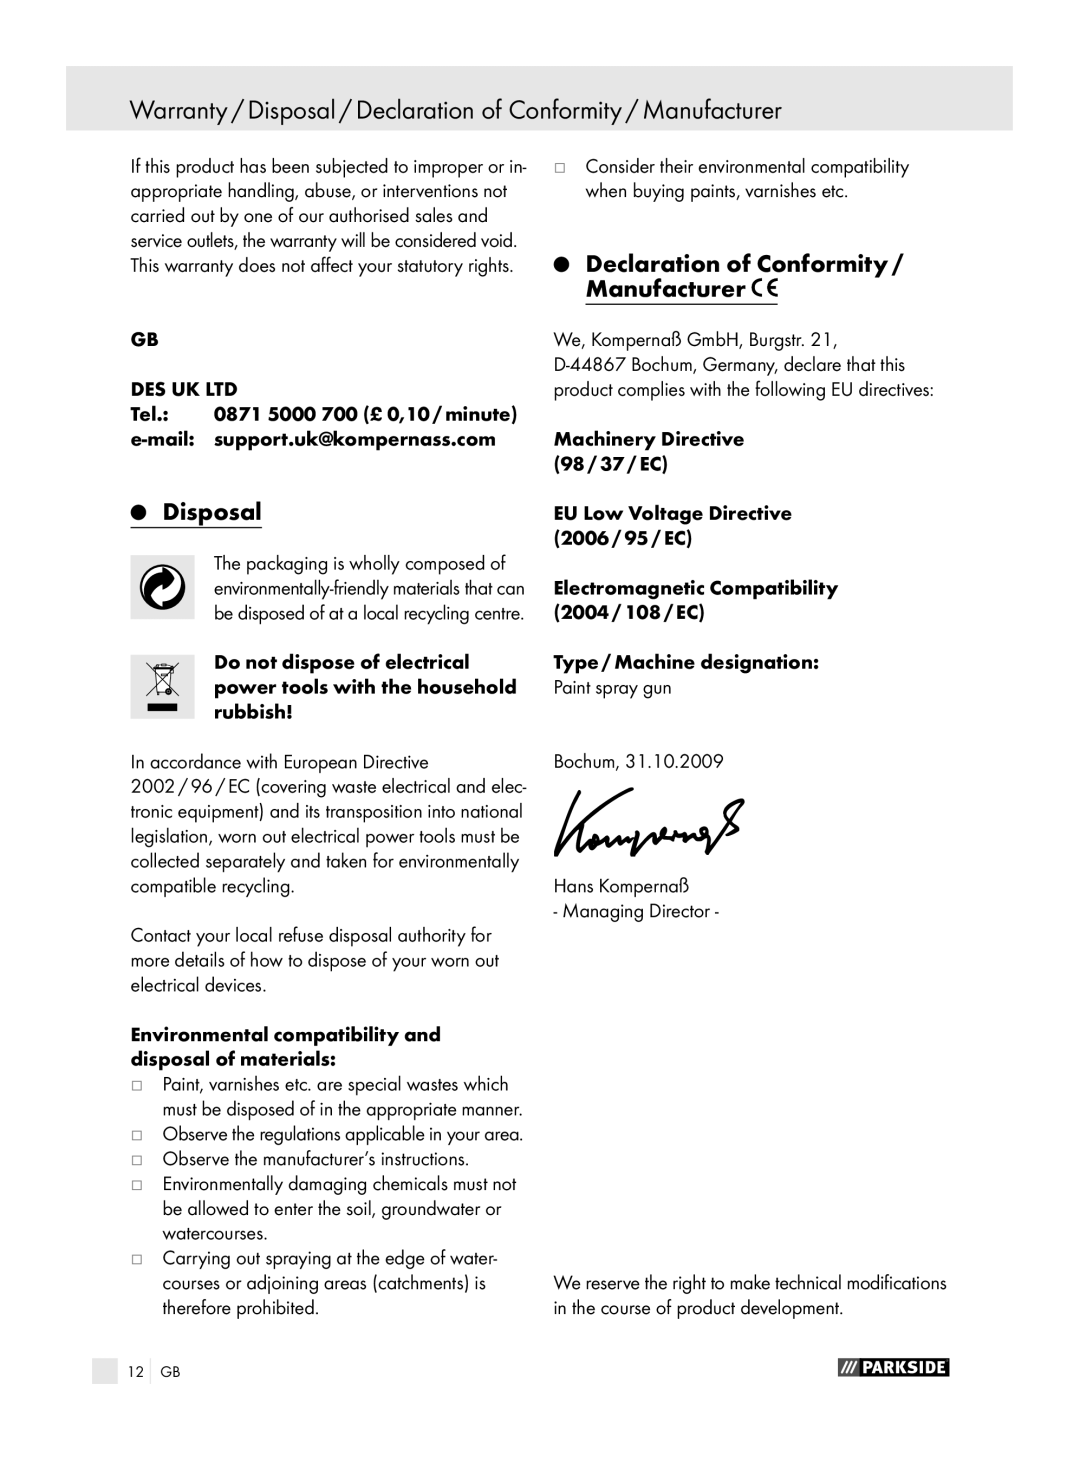 Parkside PFSP 100 manual Disposal, Declaration of Conformity / Manufacturer 